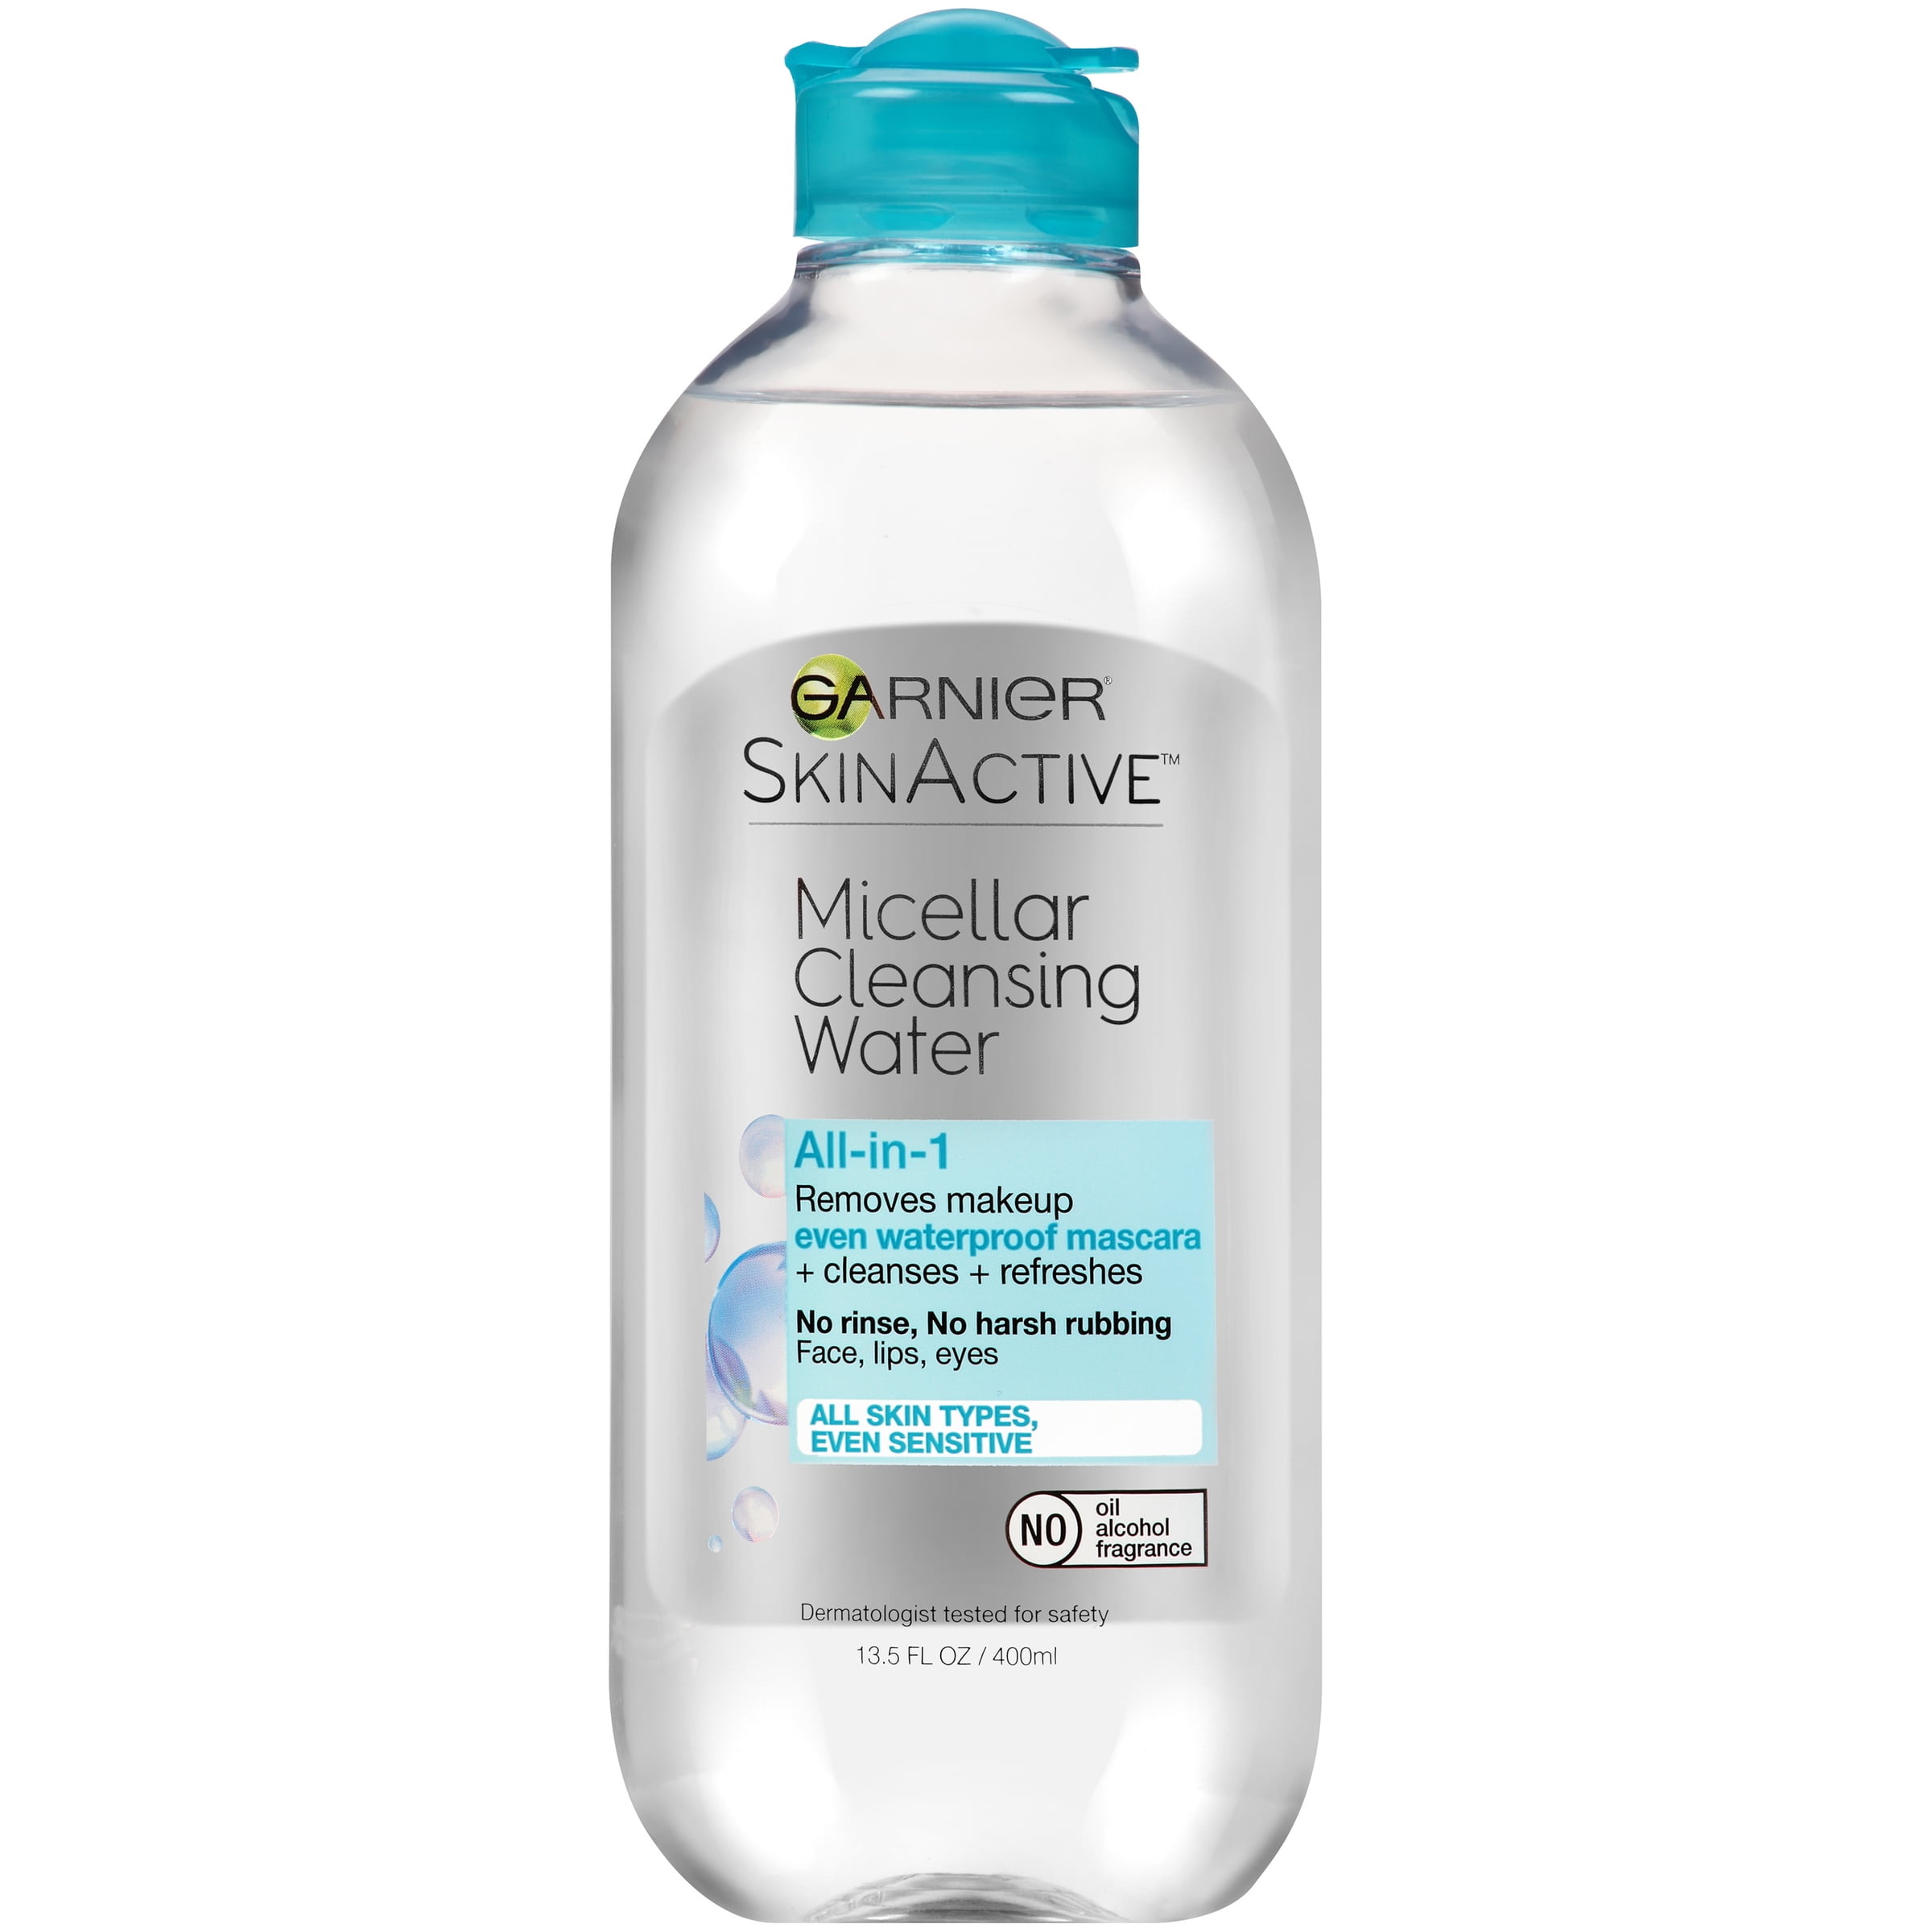 Garnier SkinActive Micellar Cleansing Water, Removes Waterproof Makeup, 13.5 fl oz